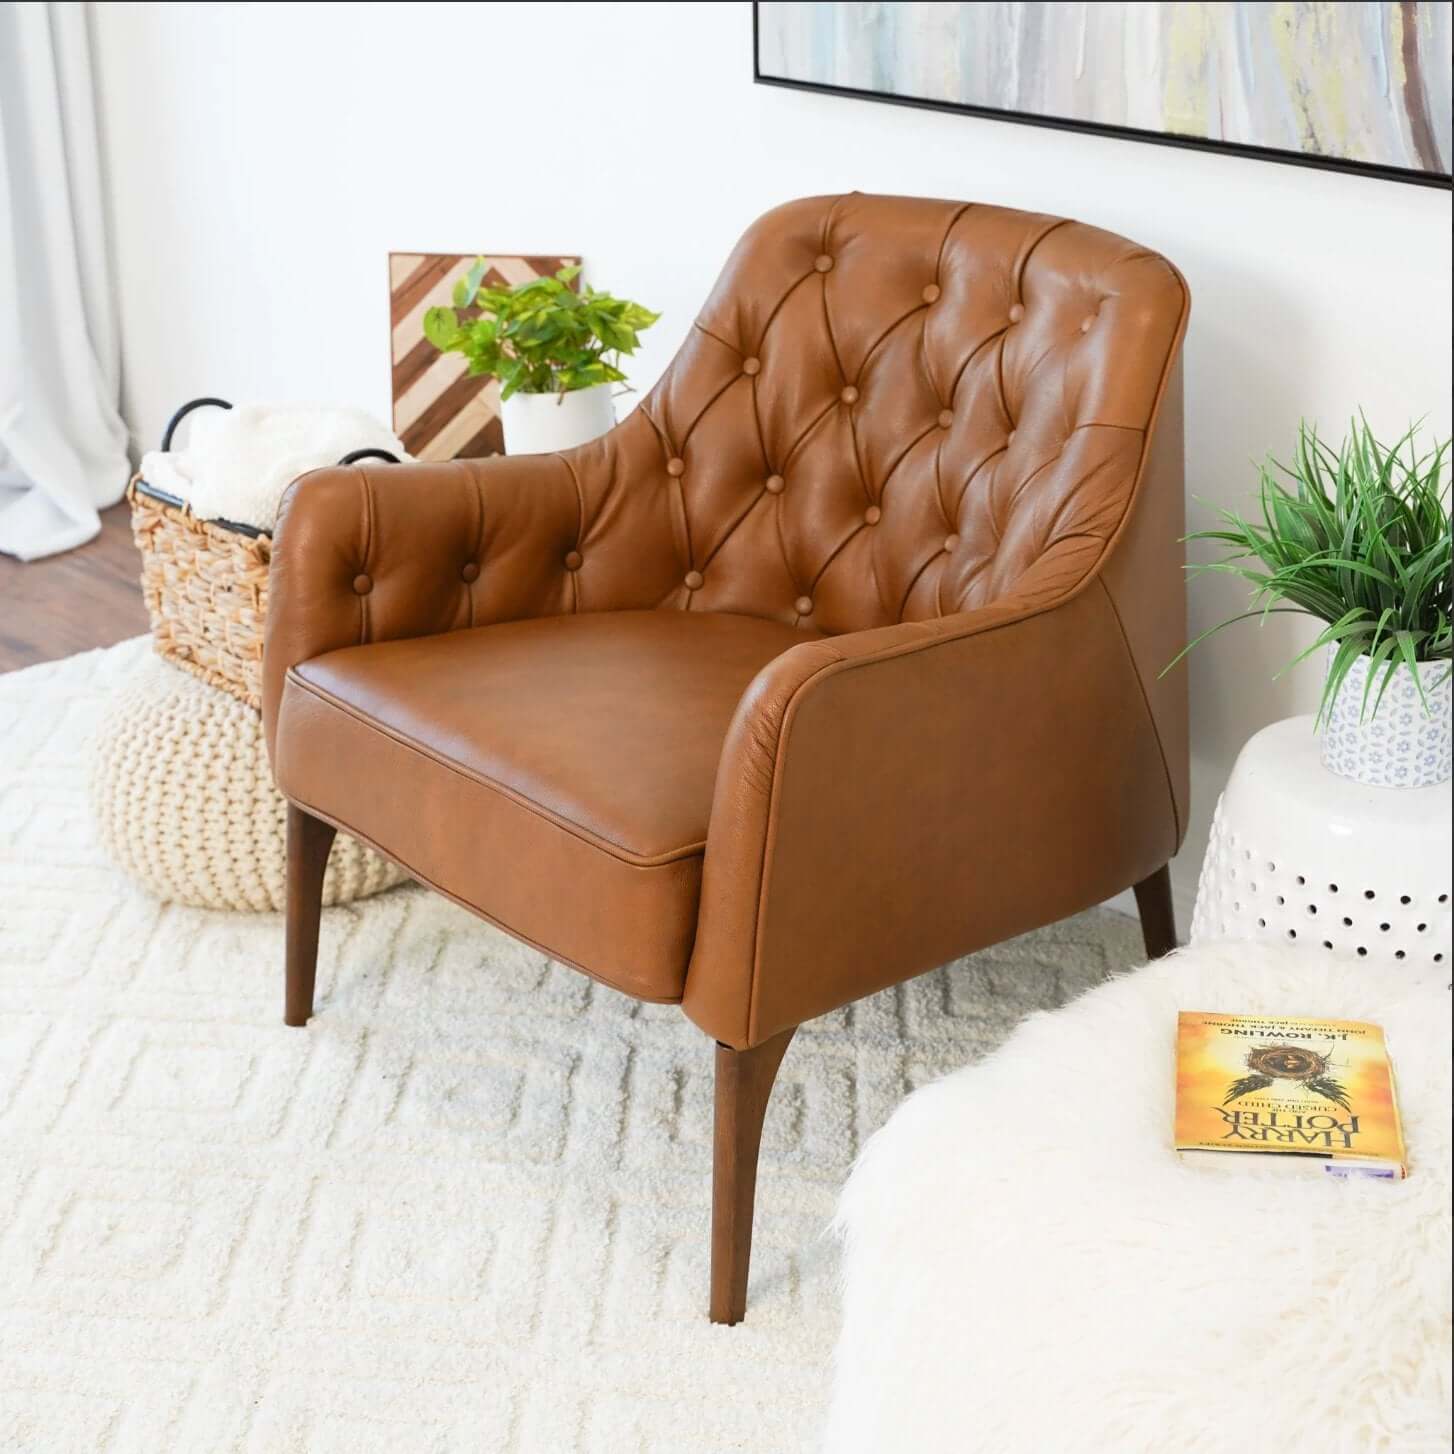 Joshua MCM Tufted Tan Leather Lounge Chair - Revel Sofa 